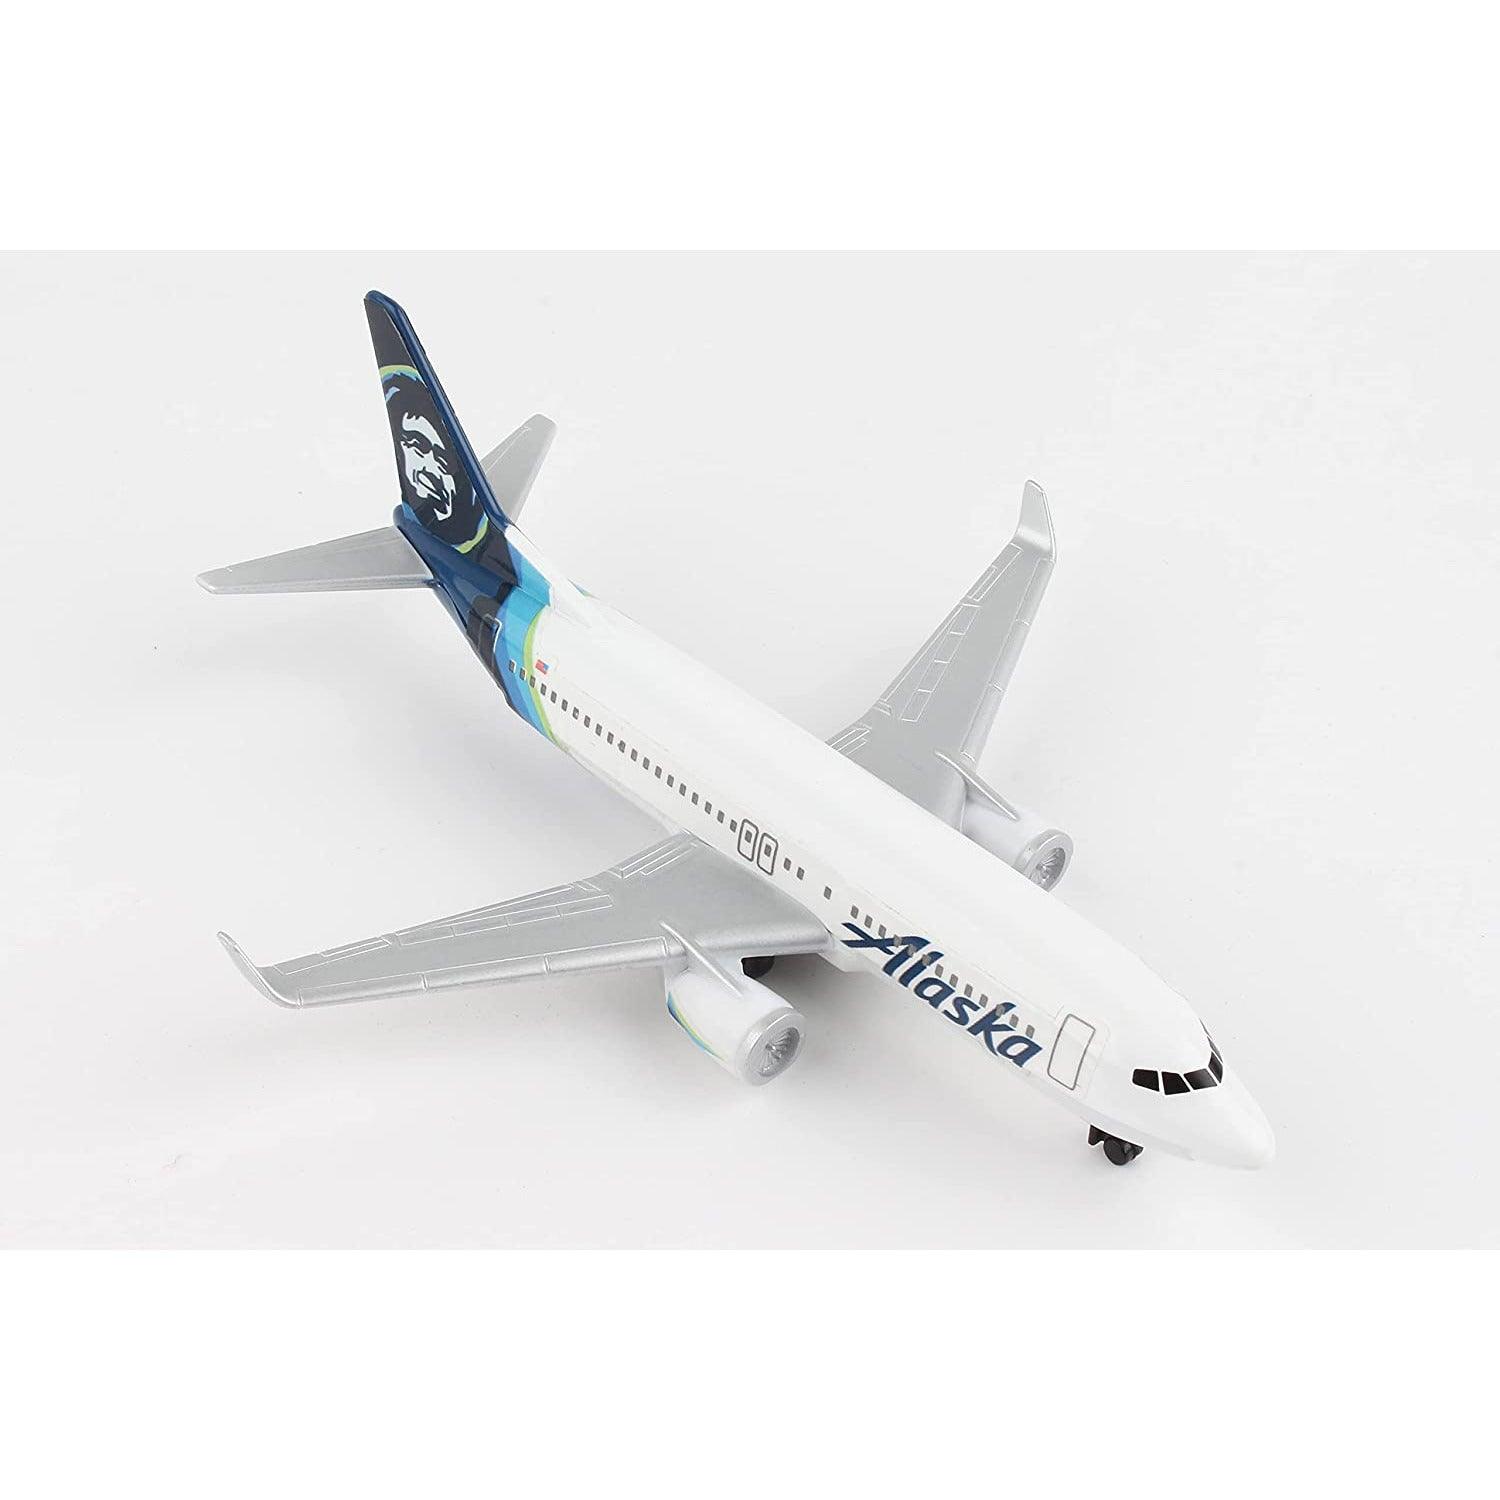 Daron Alaska Airlines Single Plane Vehicle RT9905 - Blue - BumbleToys - 6+ Years, Boys, EXO, Flying, Girls, Pre-Order